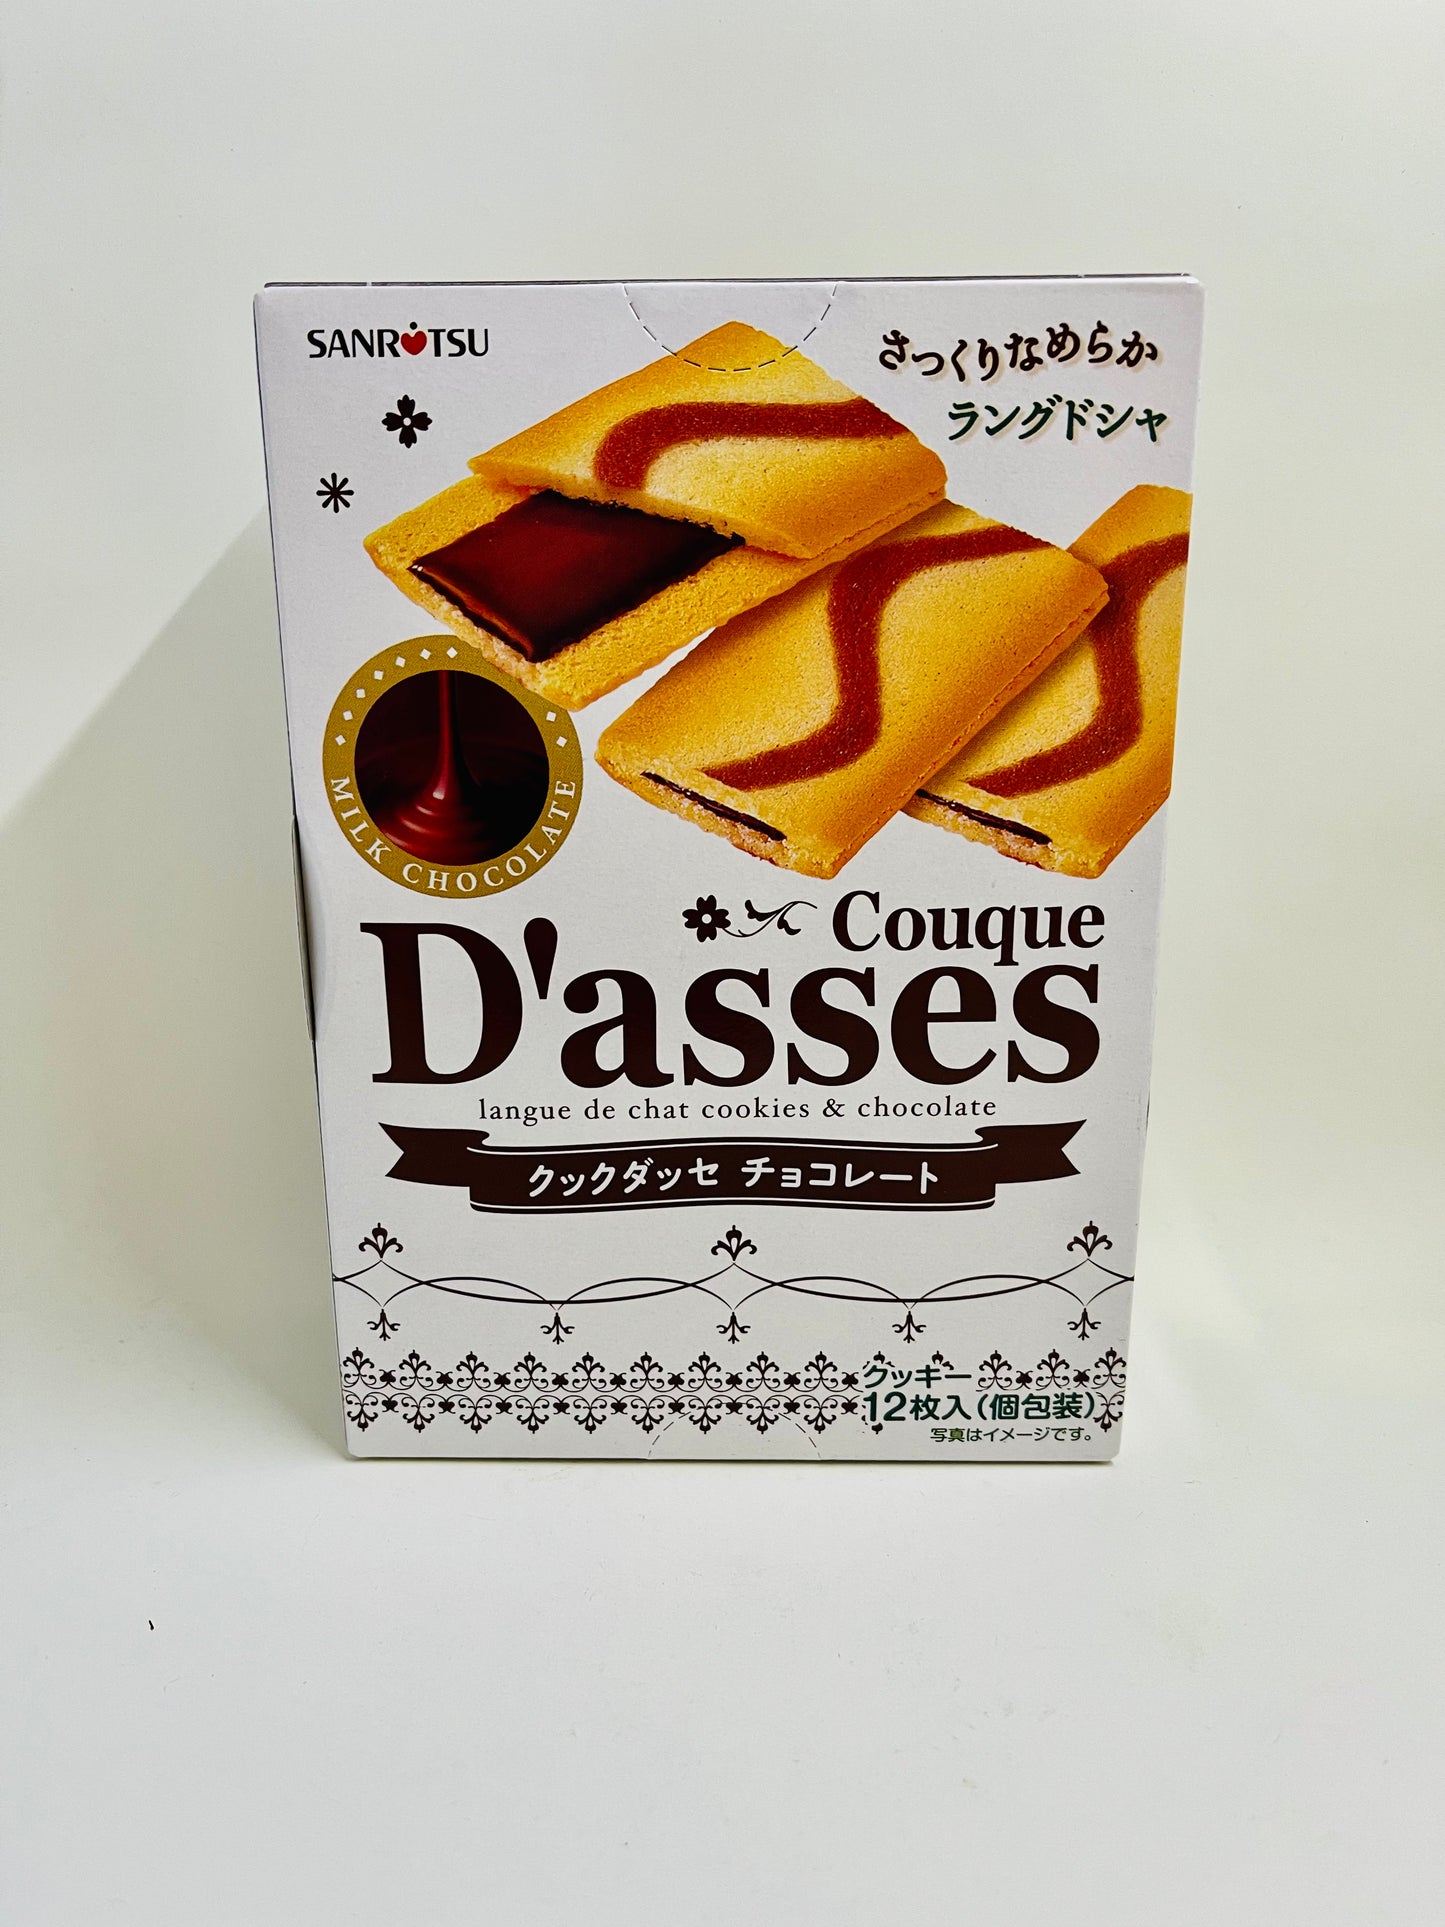 Cook Dasse "Chocolate"